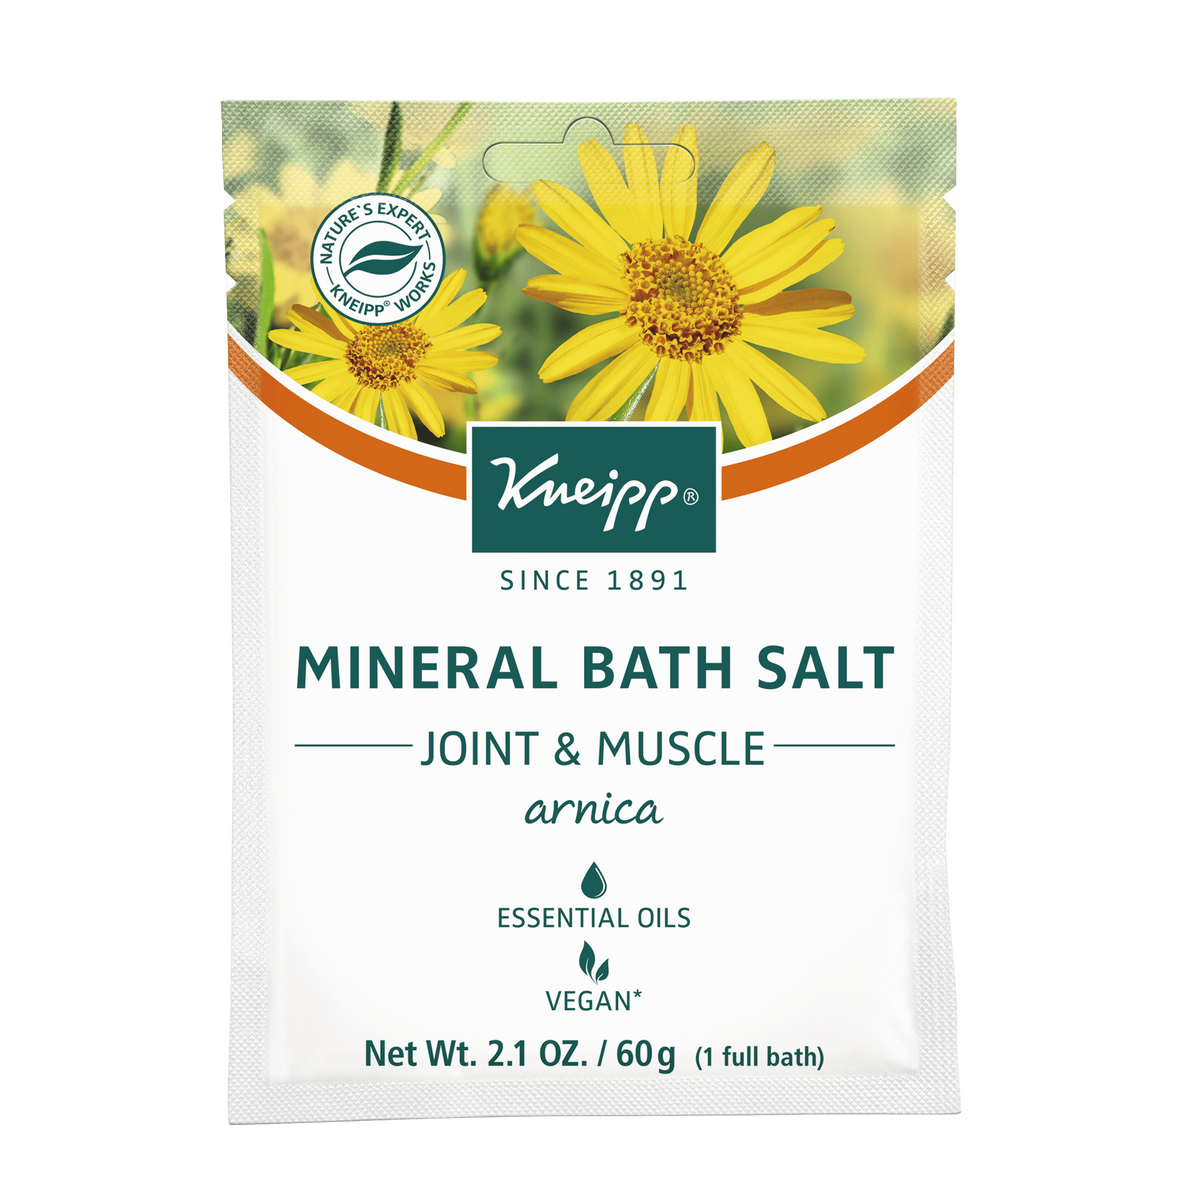 Kneipp Arnica Joint & Muscle Mineral Bath Salt